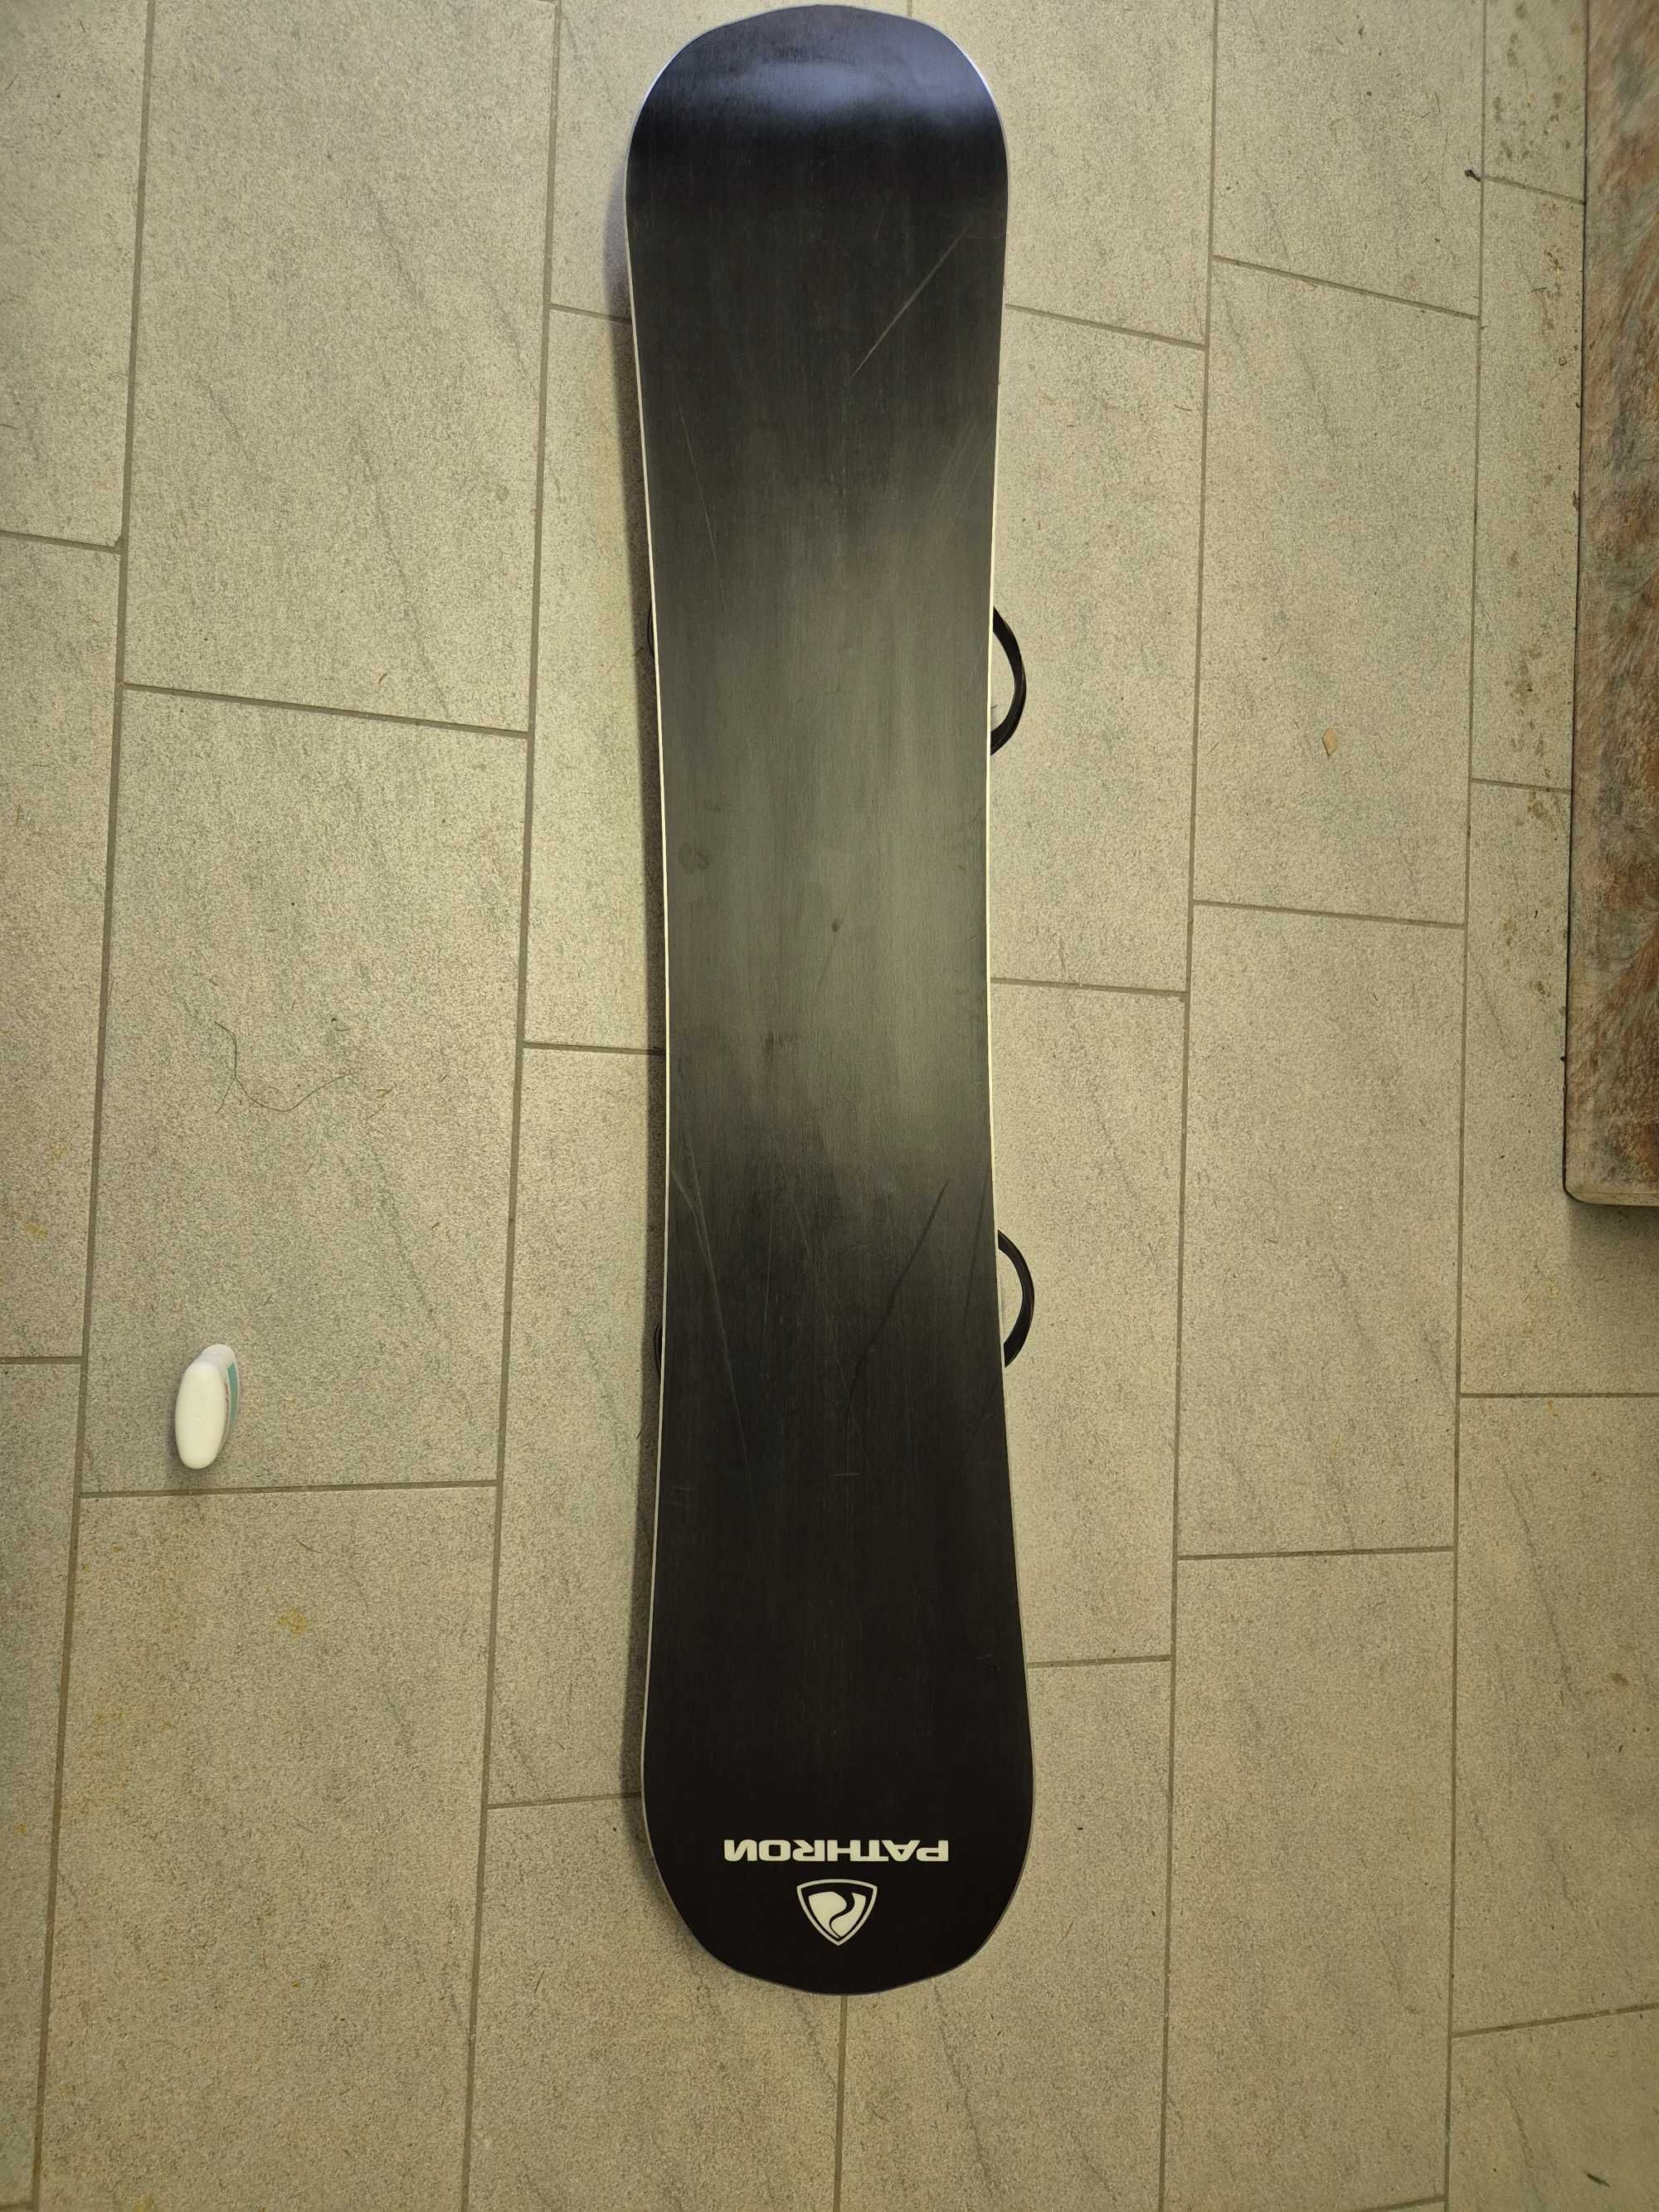 Snowboard Pathron 159cm